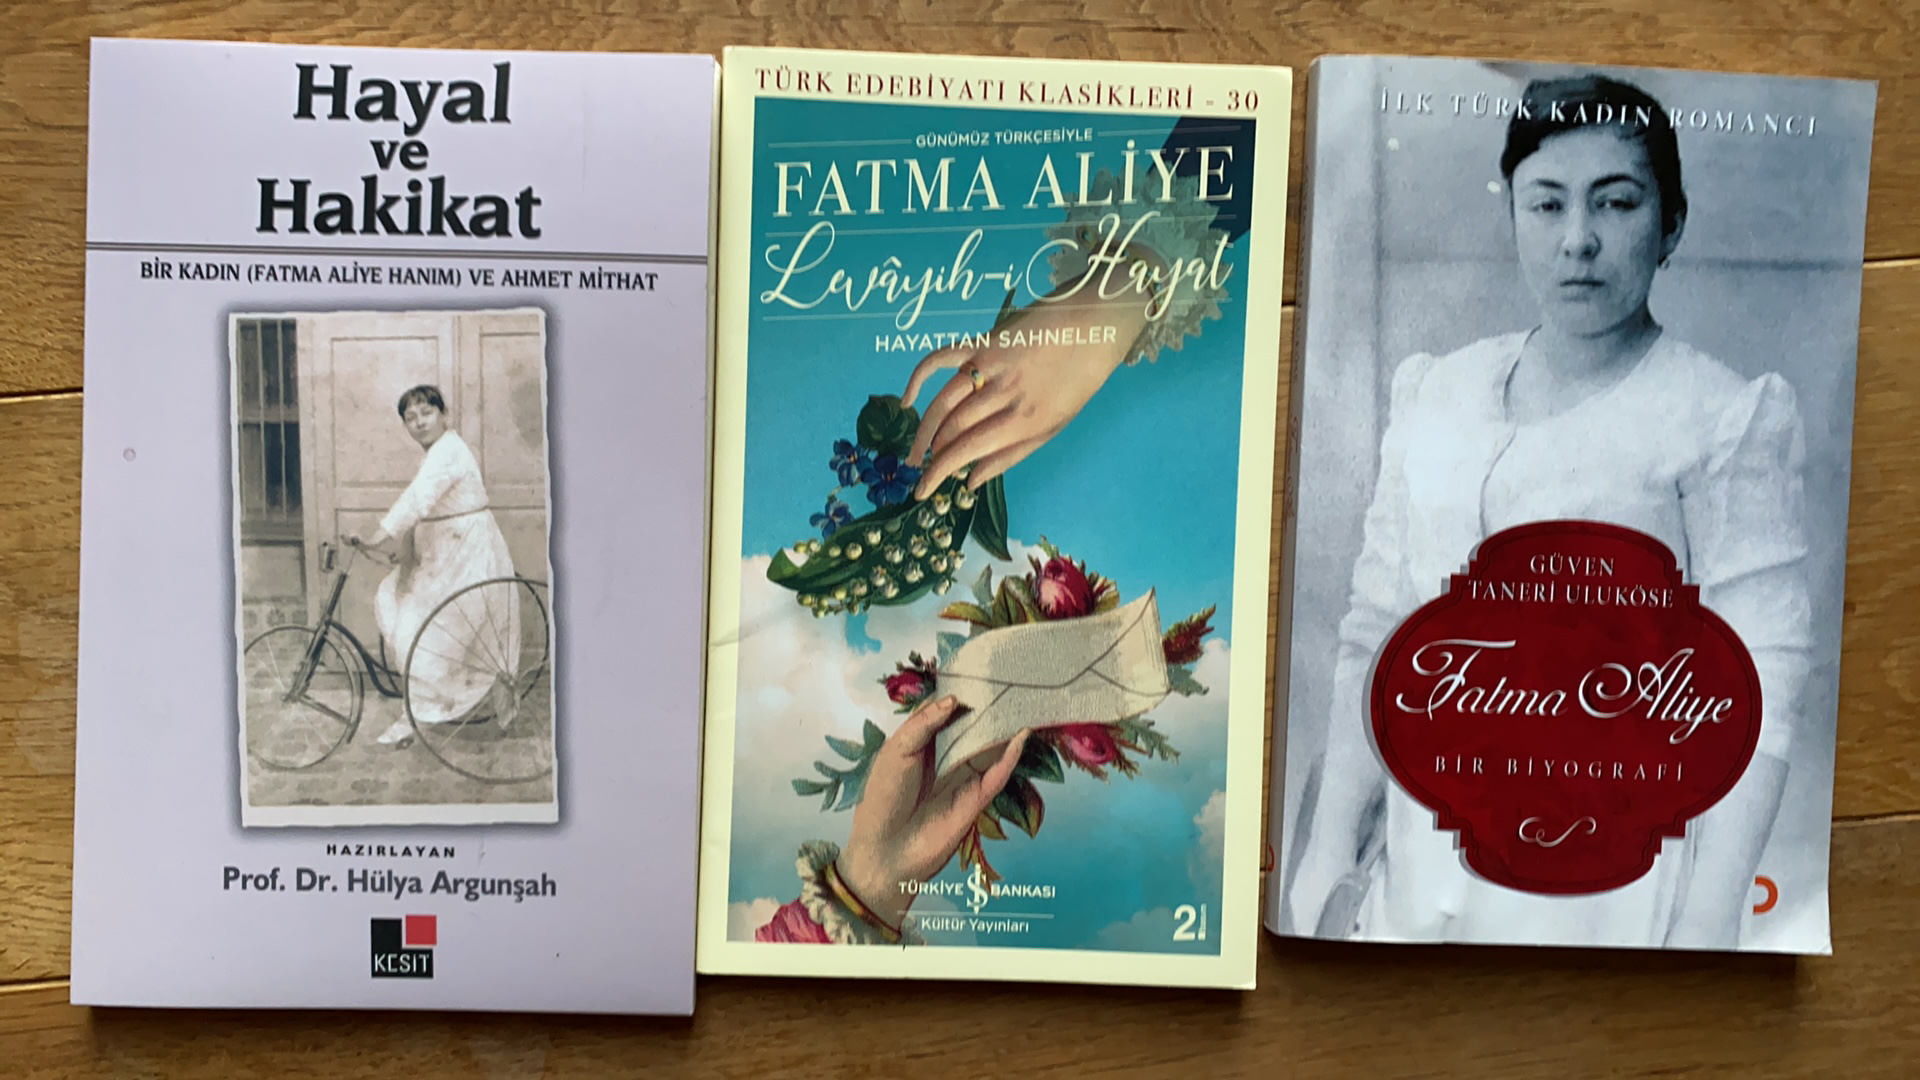 Novels by Fatma Aliye, Turkey's first female novelist